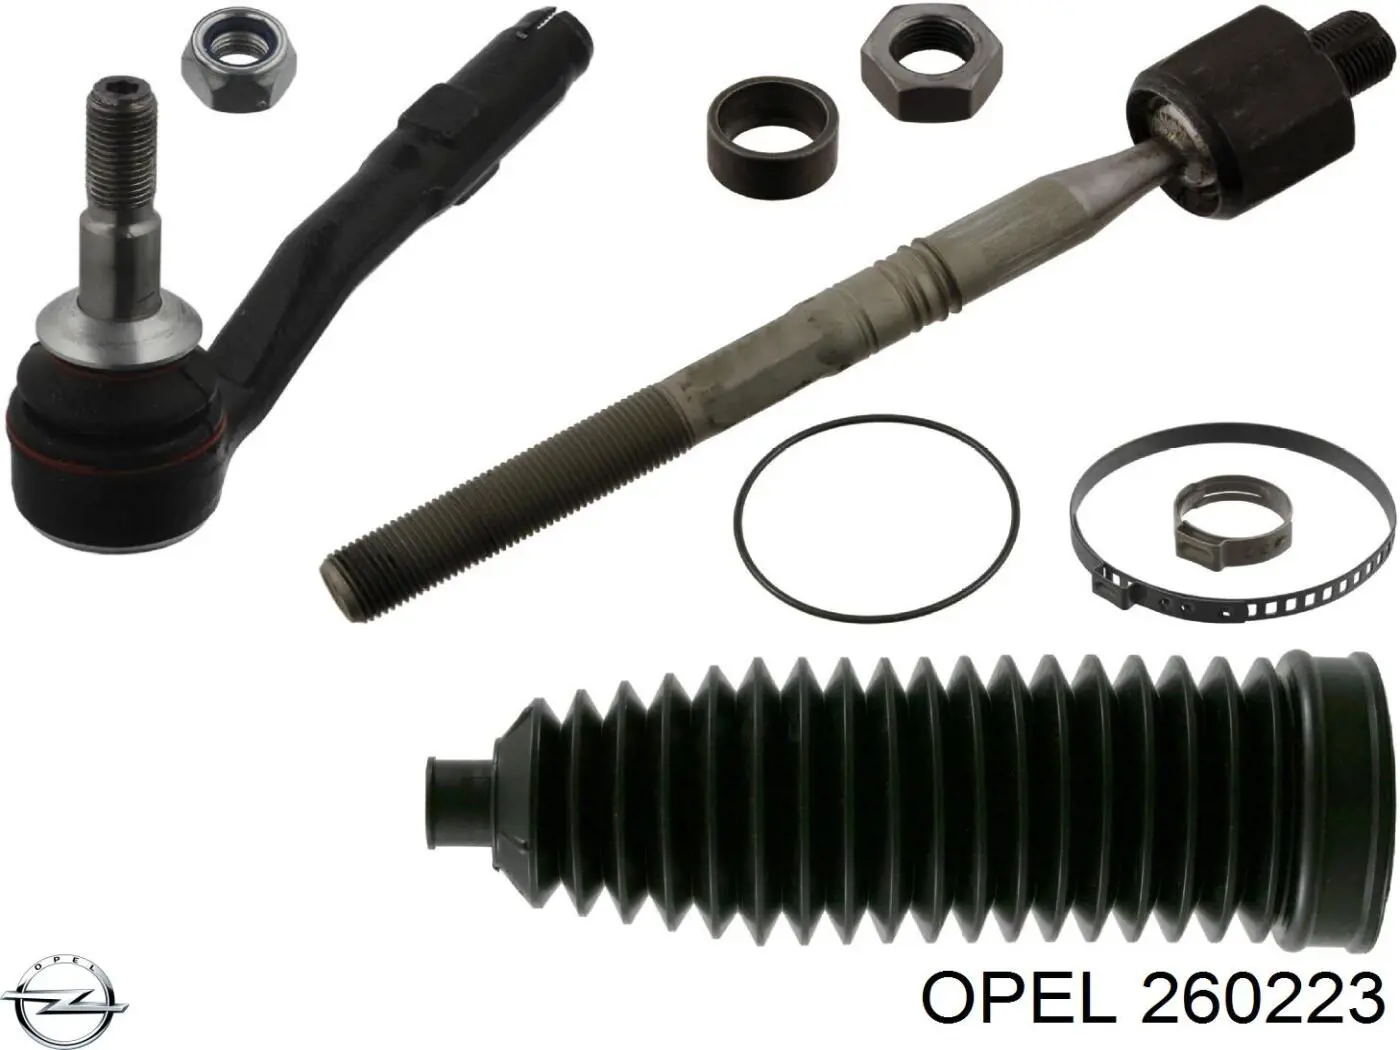 2 60 223 Opel крепление (подставка аккумулятора (АКБ))